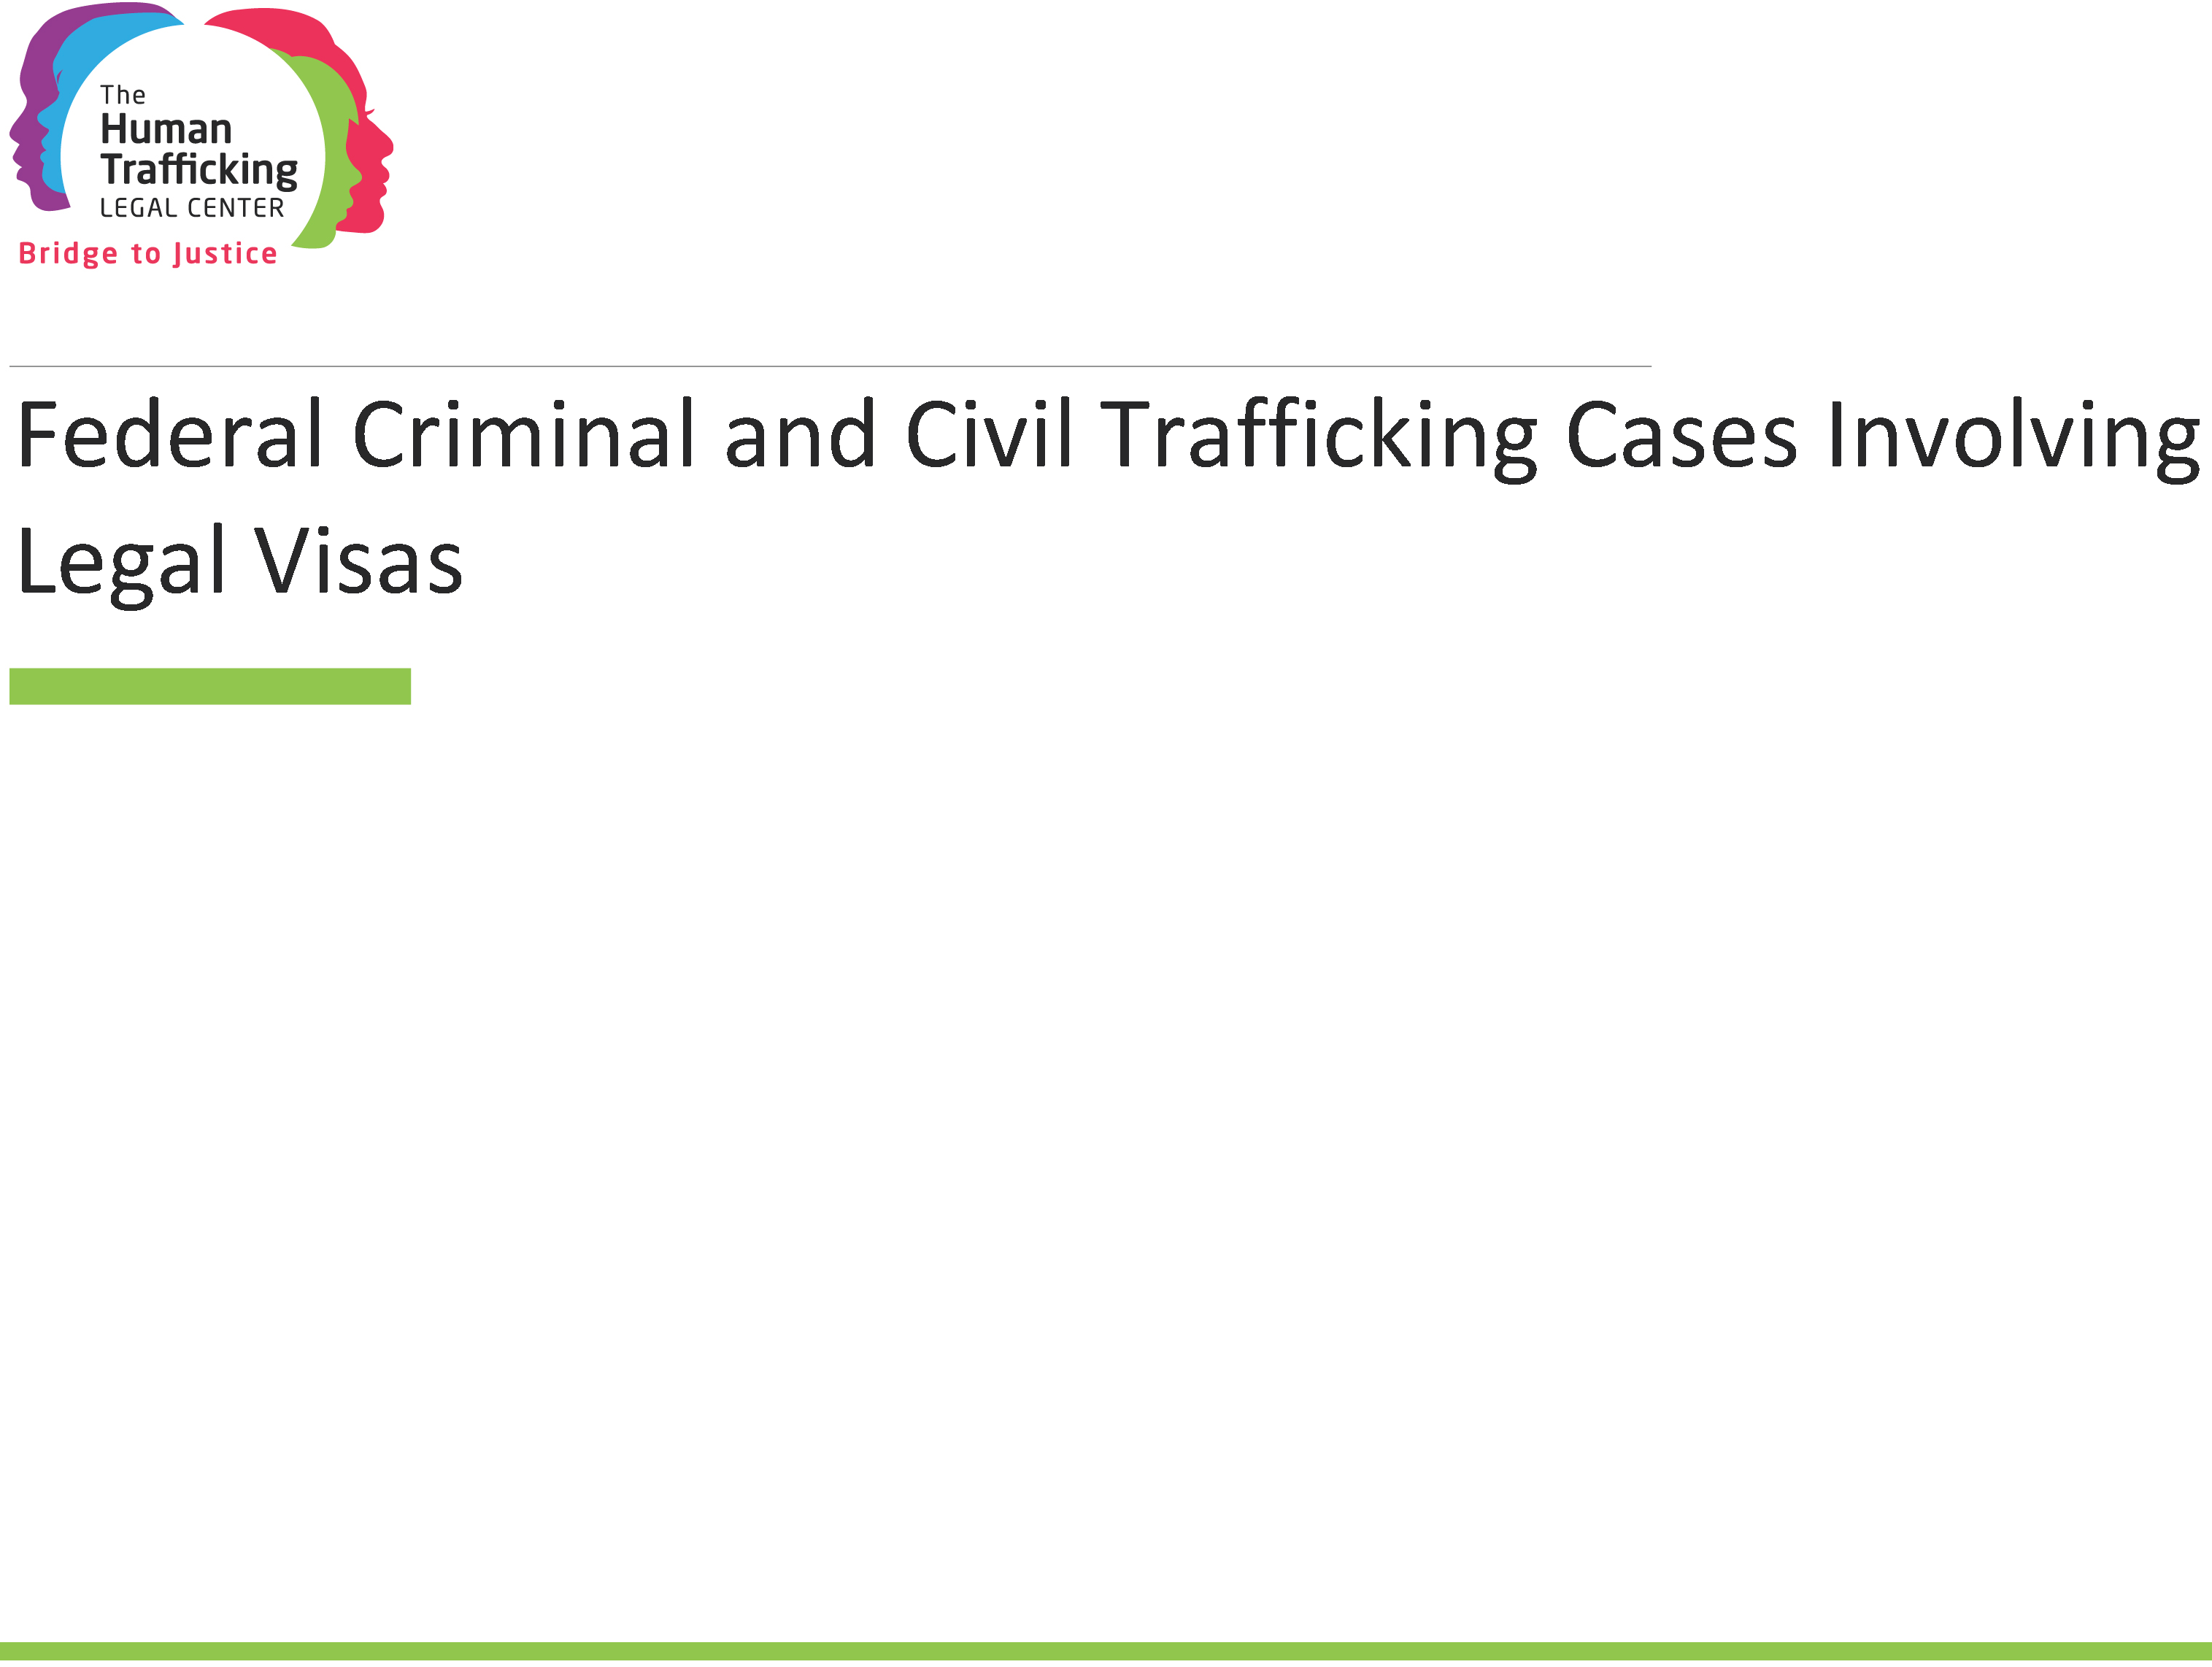 Federal Criminal and Civil Trafficking Cases Involving Legal Visas